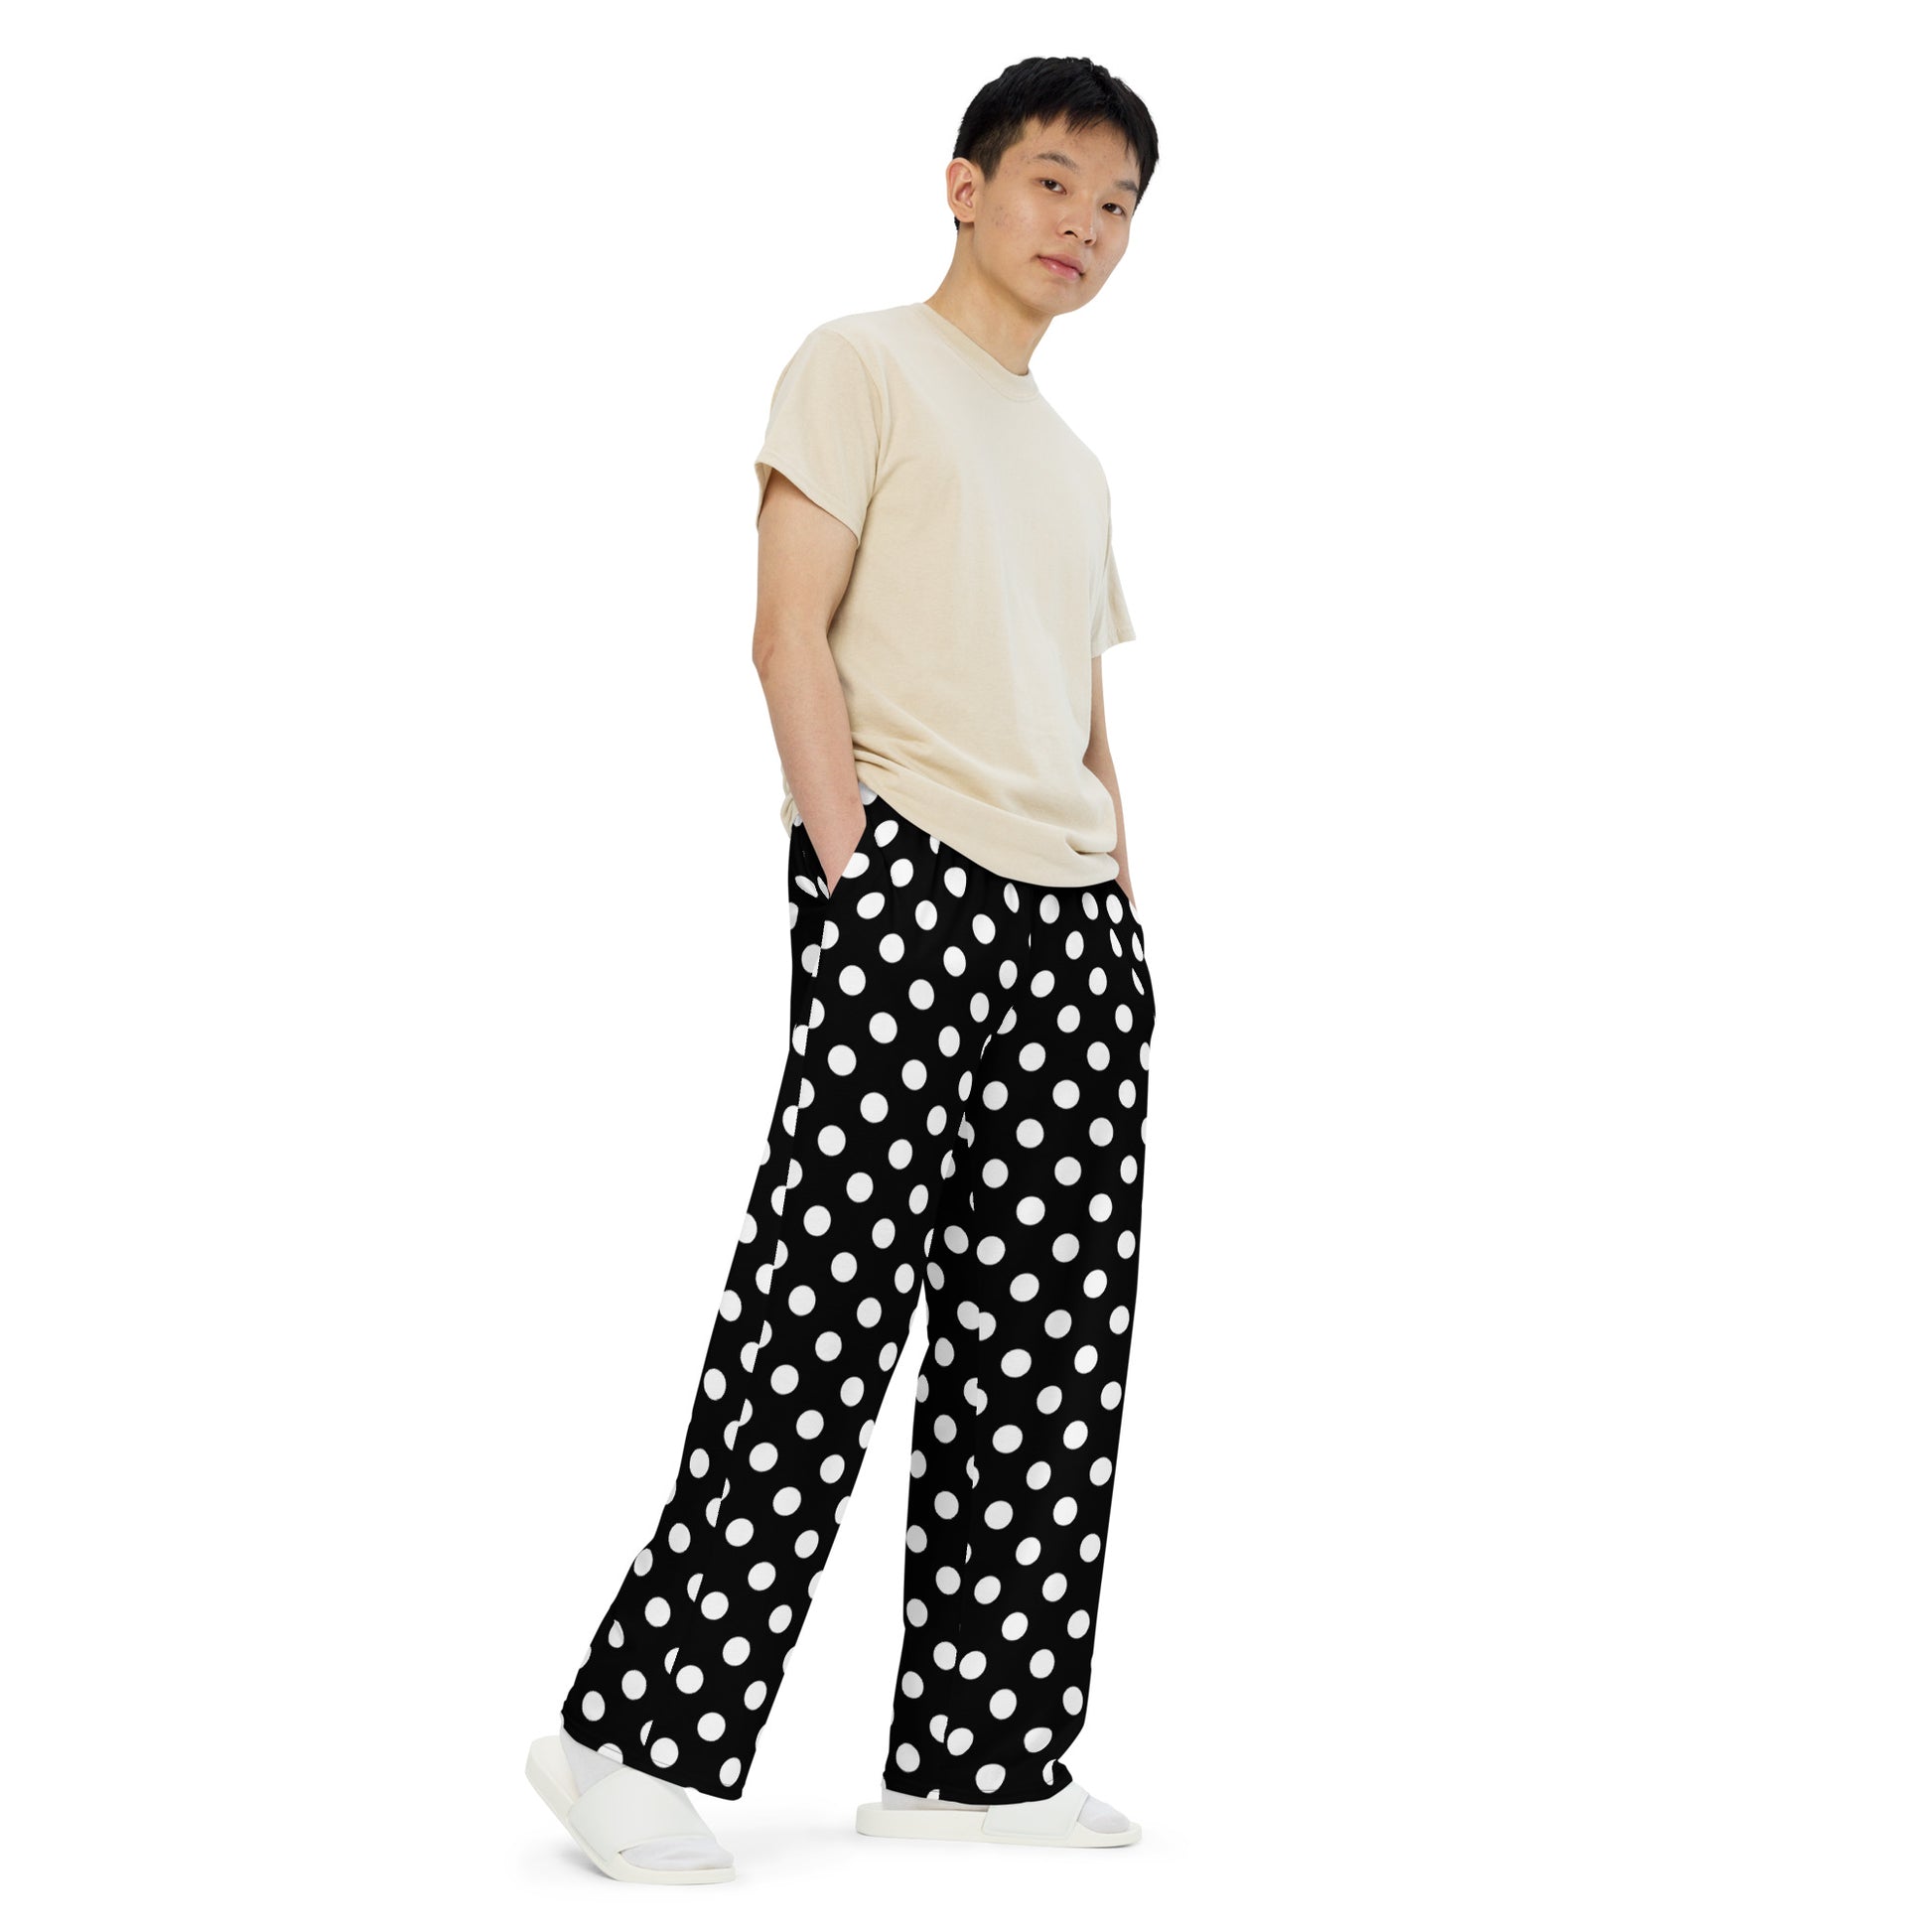 Polka Dots Lounge Pants with Pockets, Black White Unisex Men Women